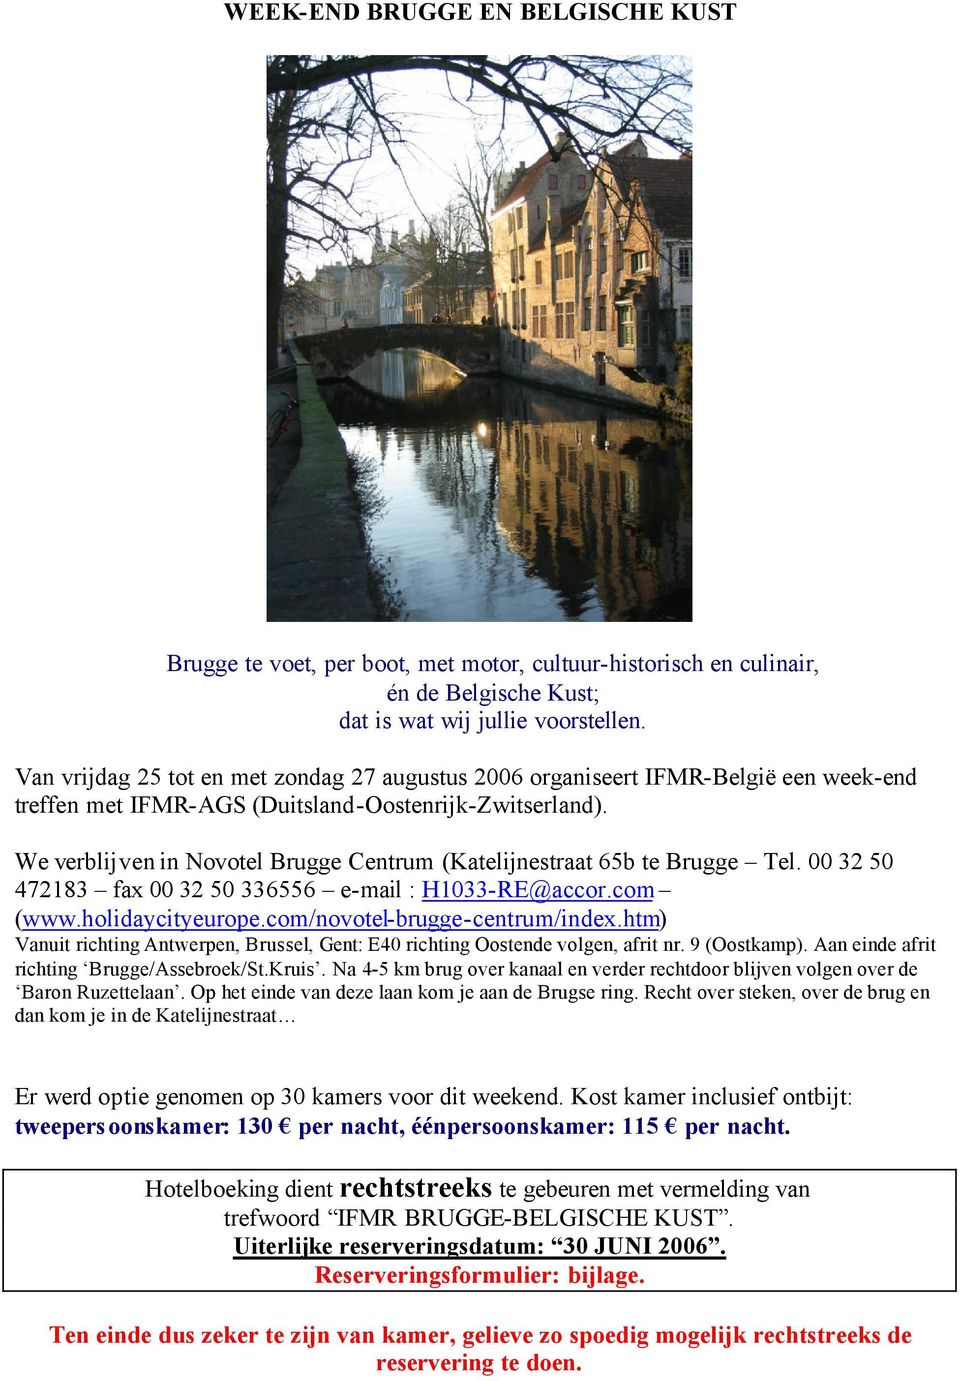 We verblijven in Novotel Brugge Centrum (Katelijnestraat 65b te Brugge Tel. 00 32 50 472183 fax 00 32 50 336556 e-mail : H1033-RE@accor.com (www.holidaycityeurope.com/novotel-brugge-centrum/index.